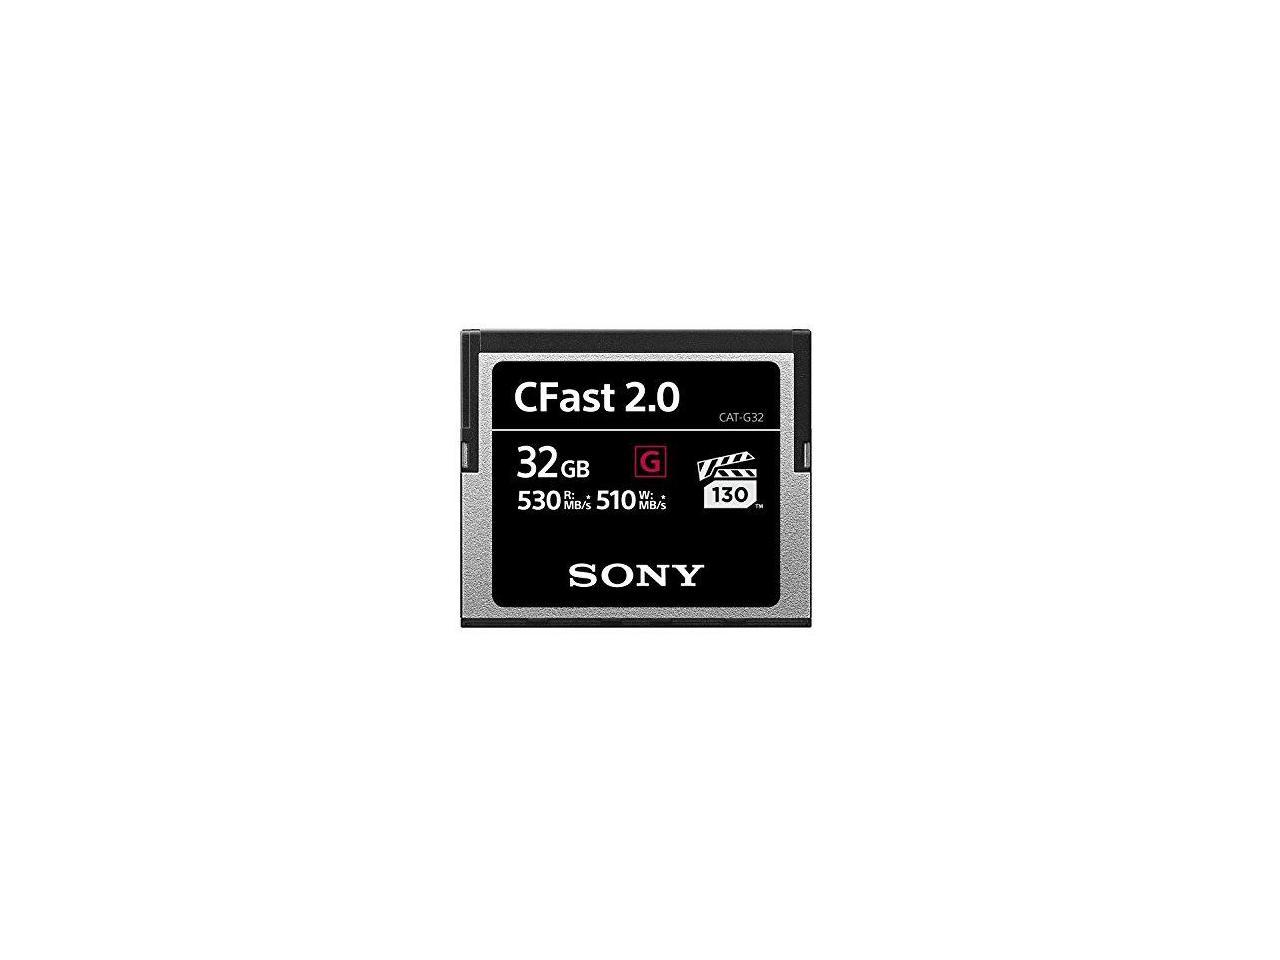 Sony Memory Card Cfast G Series Cat-g32 32gb 525mb/s